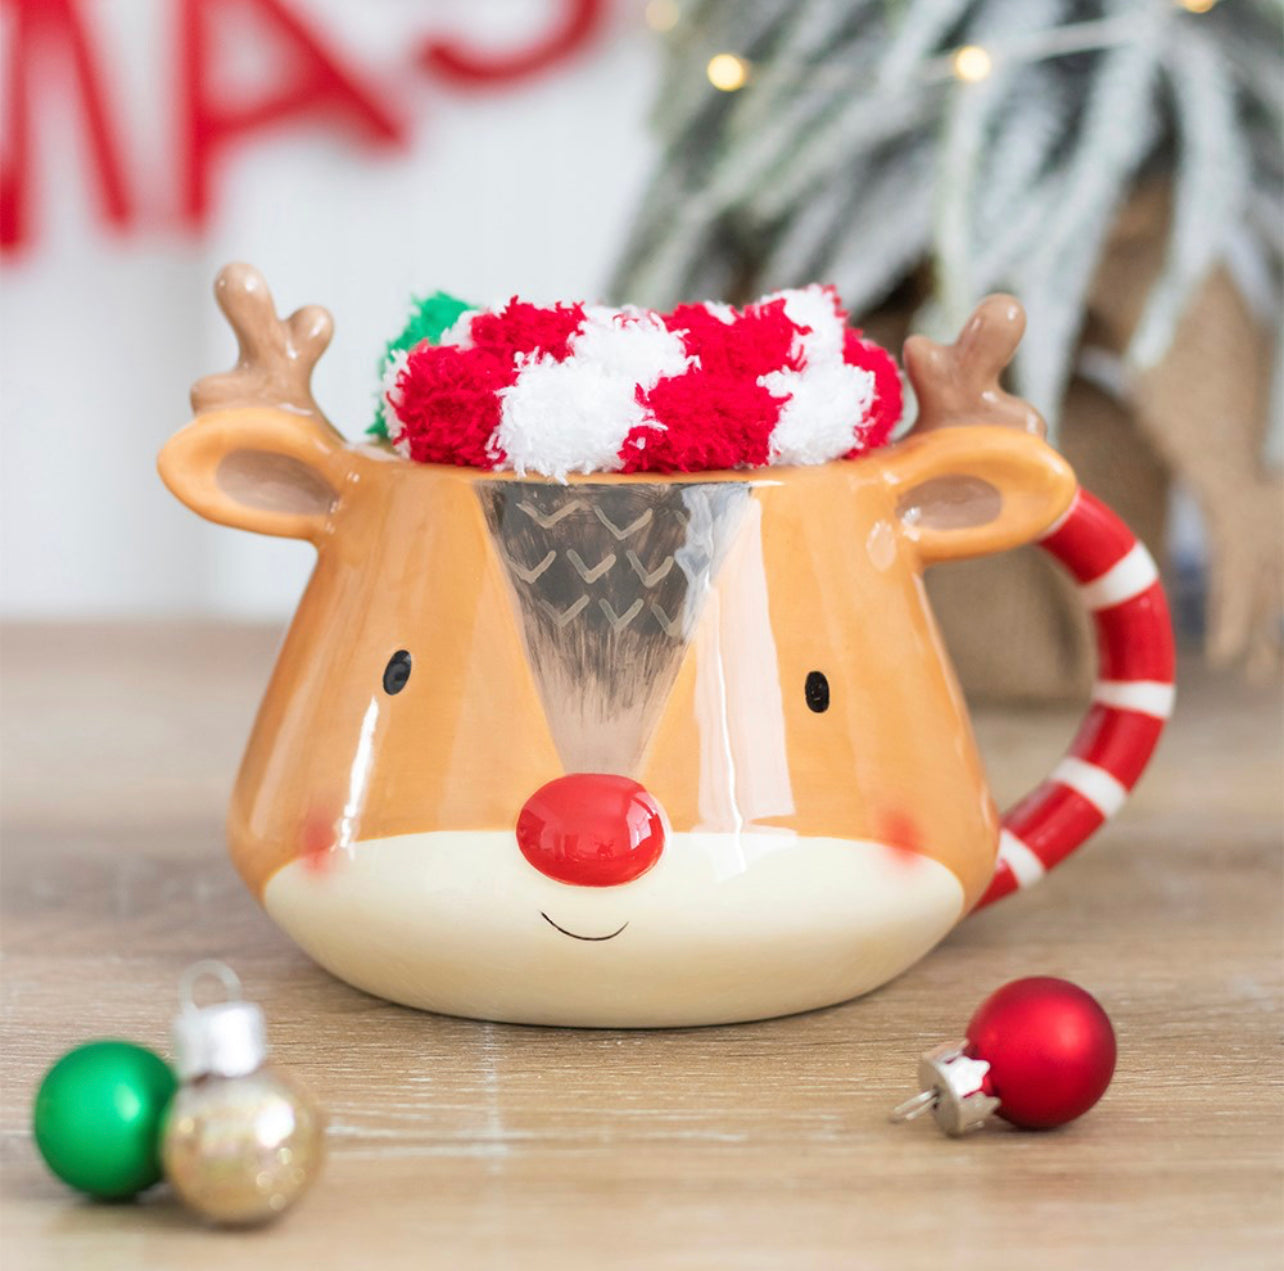 Reindeer Mug & Socks Set